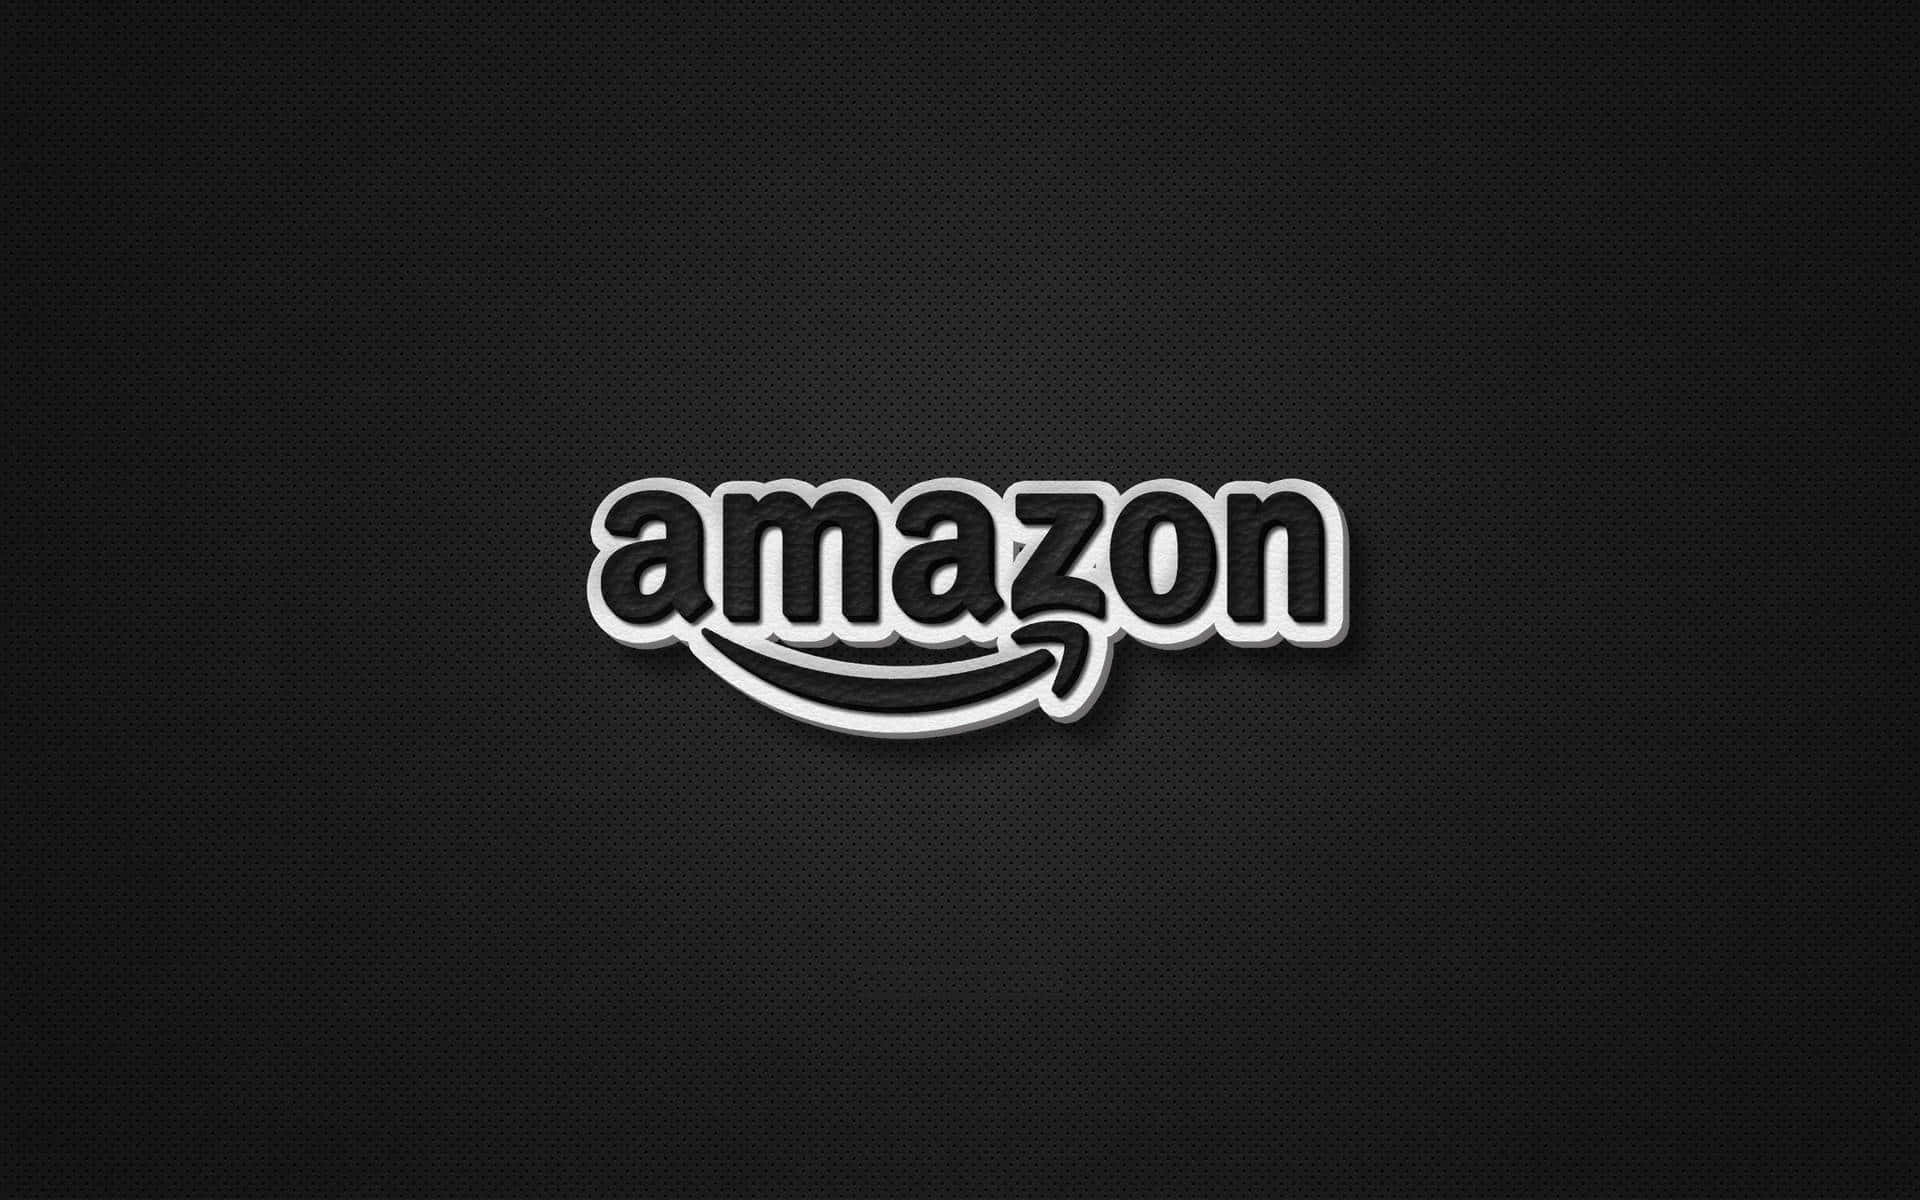 Amazon UK Monochrome Logo Wallpaper